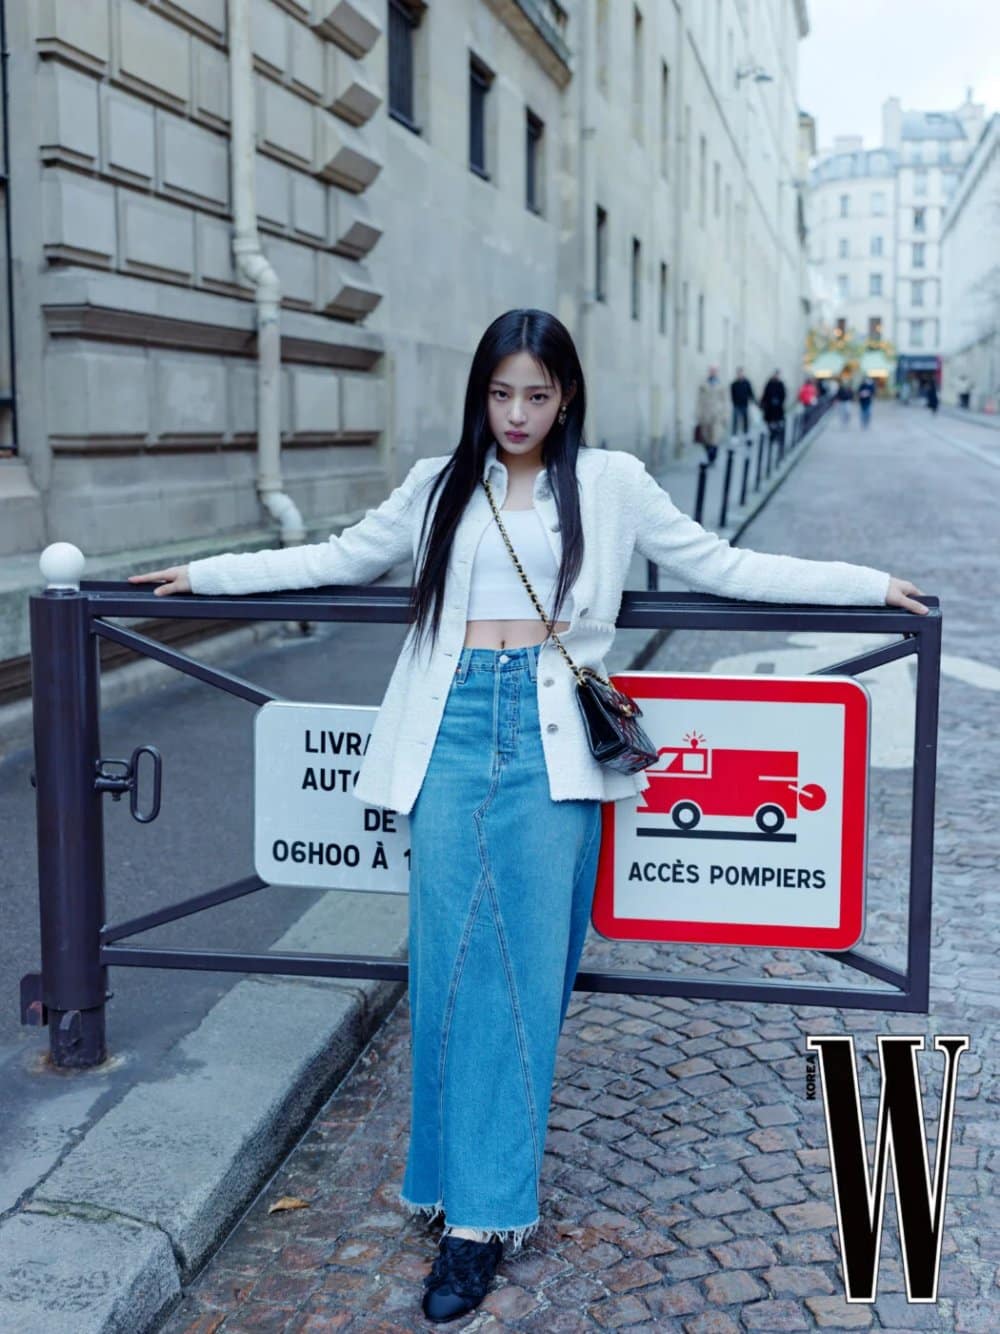 Минджи из NewJeans гуляет по улицам Парижа в фотосессии Chanel для W Korea